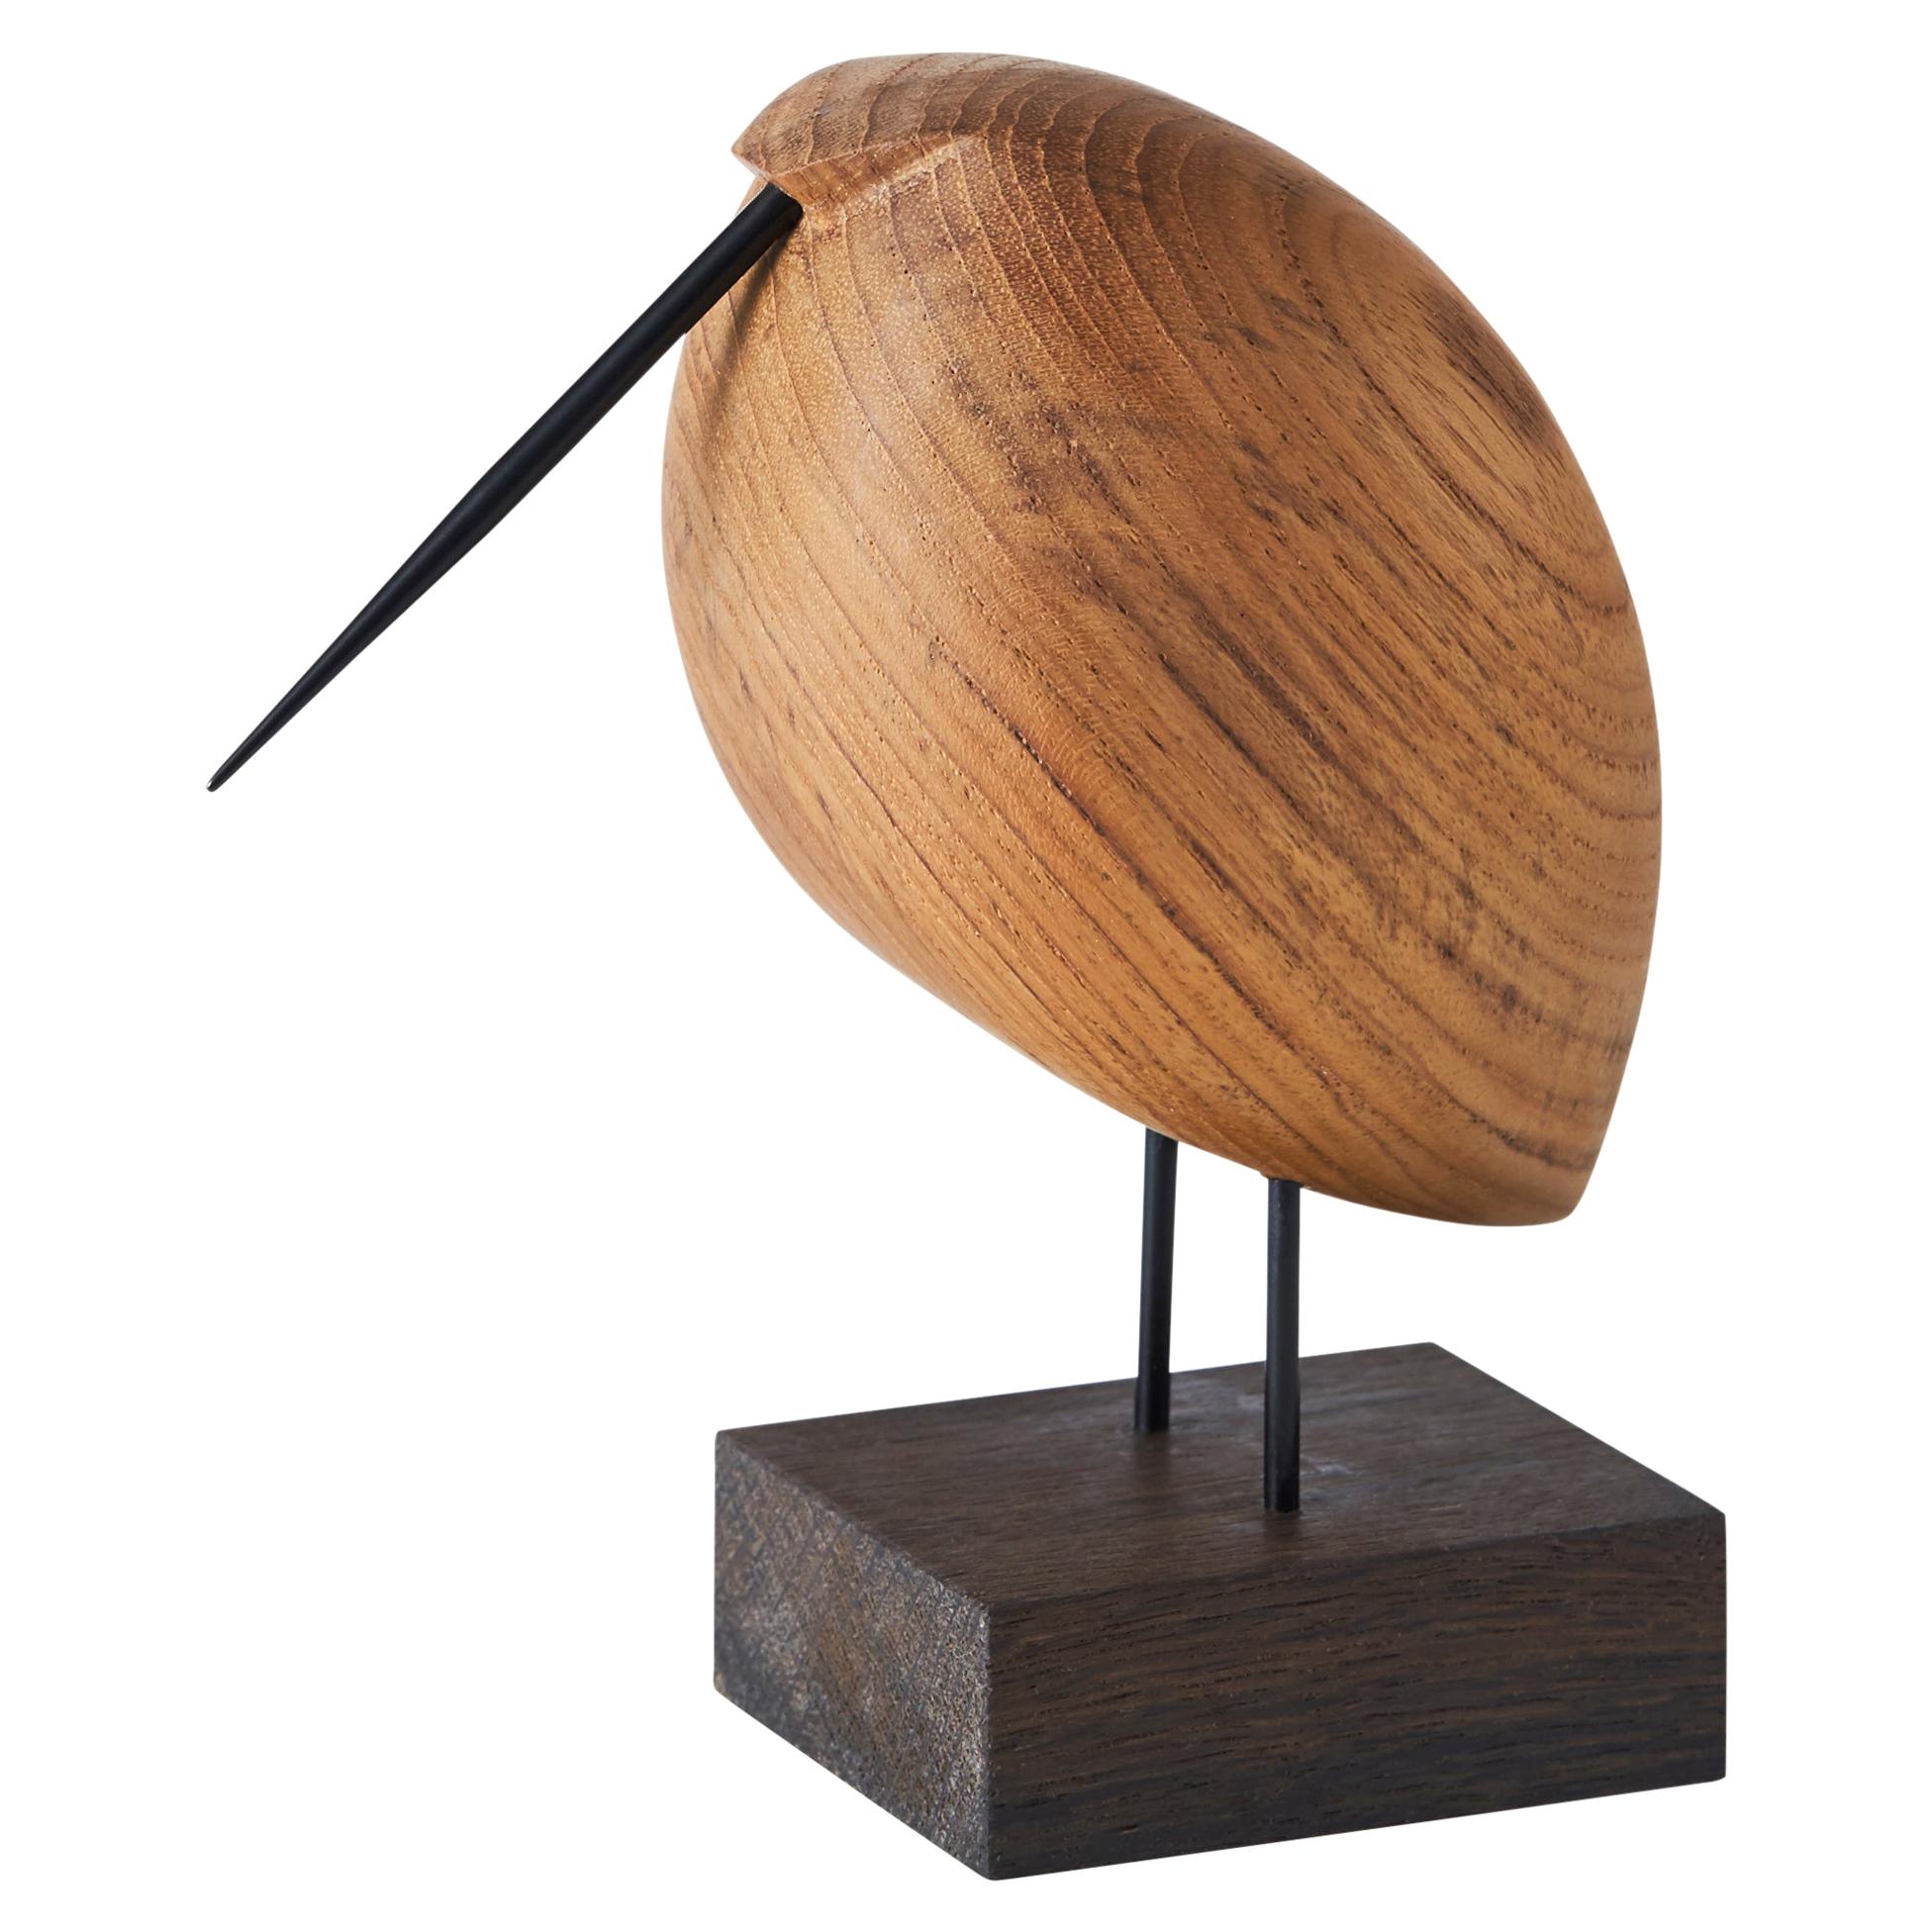 Lazy Snipe Beak Bird Teak Sculpture by Svend-Aage Holm-Sørensen for Warm Nordic